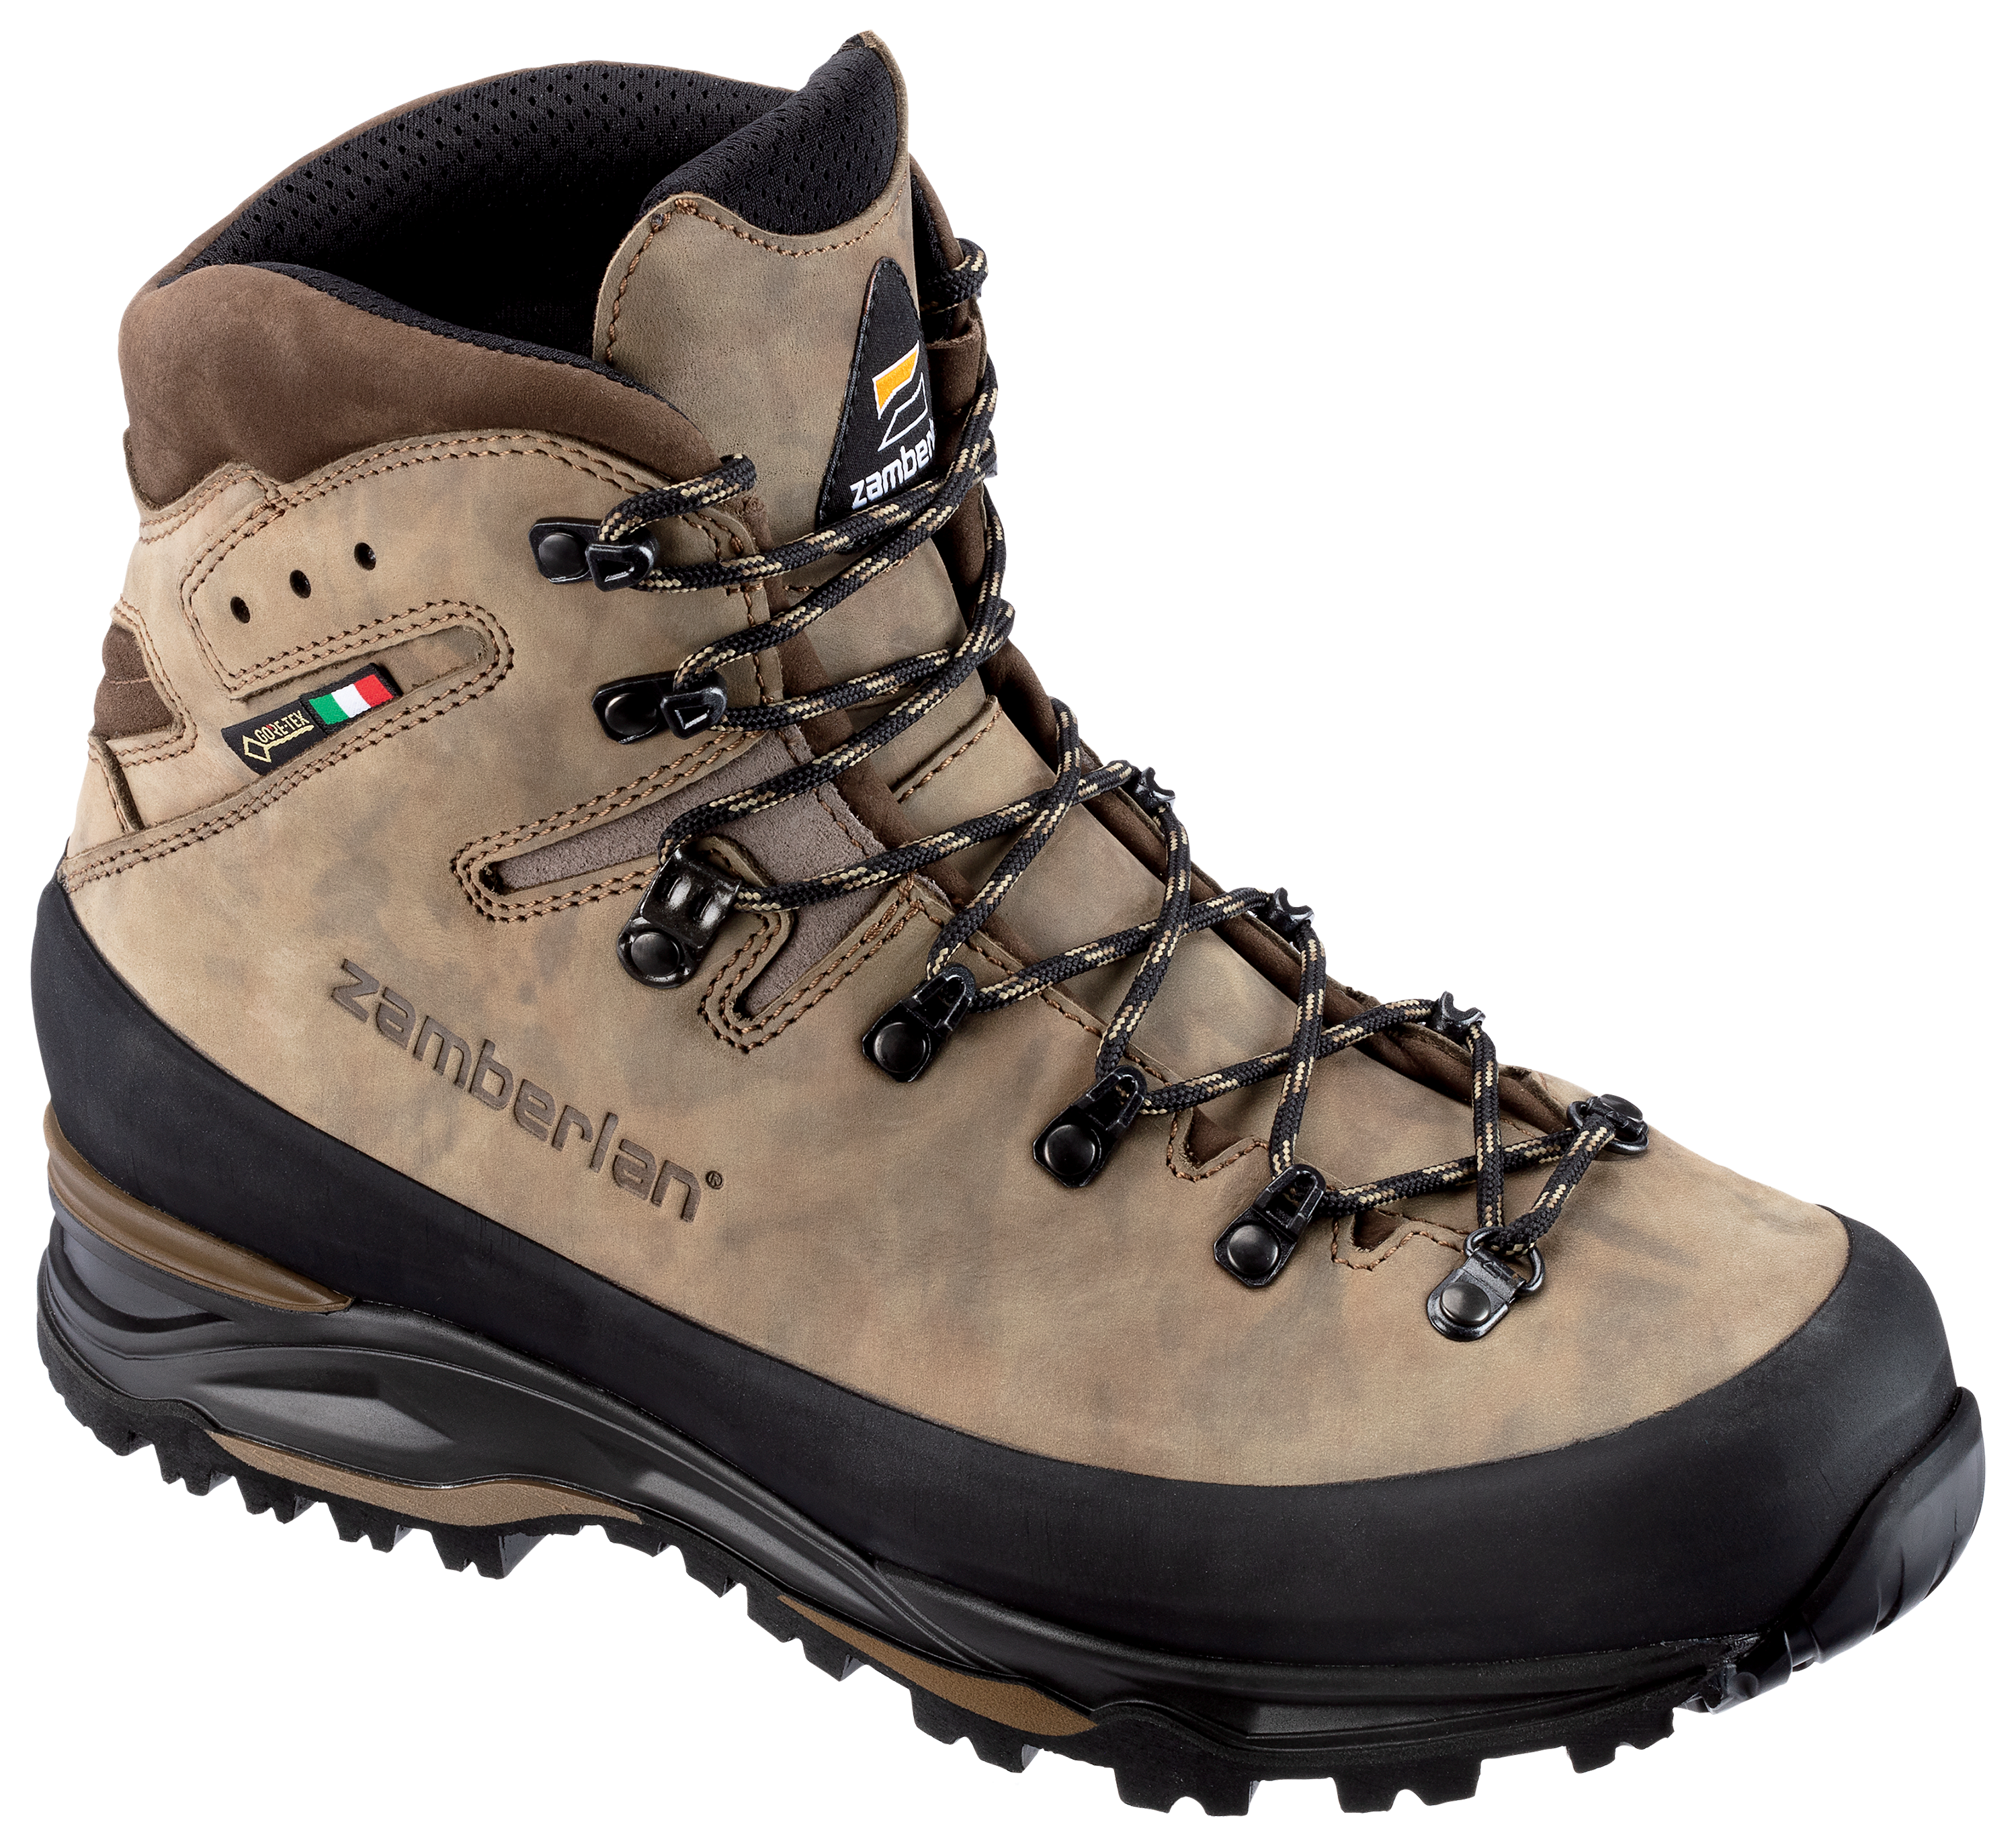 Zamberlan 960 Guide GORE-TEX RR Hunting Boots for Men - Brown Camo - 9.5W